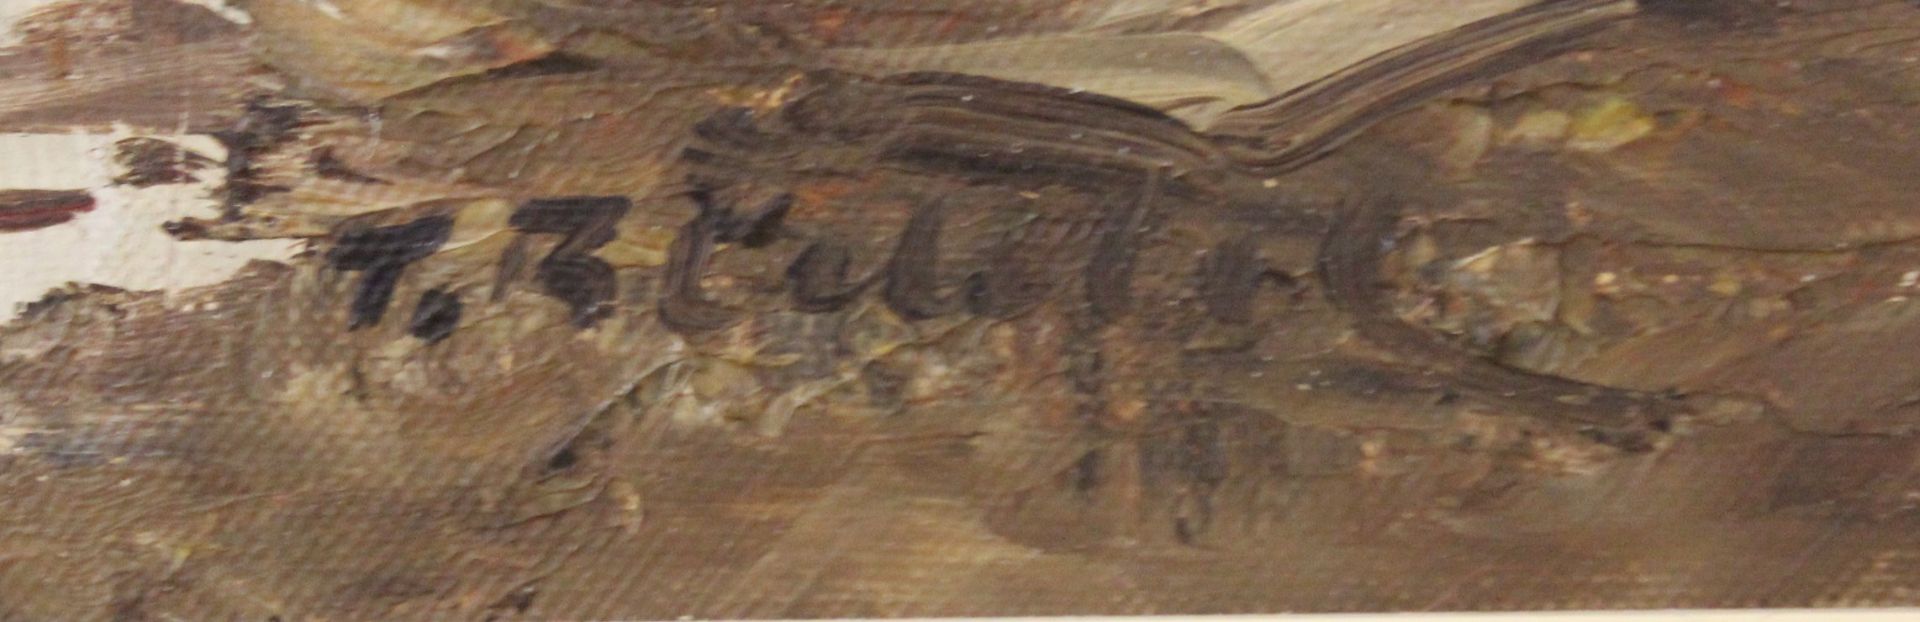 unleserl.signiert, verso betitelt "Ewer am Morgen", Öl/Leinwand, gerahmt, RG 63 x 113cm. - Bild 2 aus 5